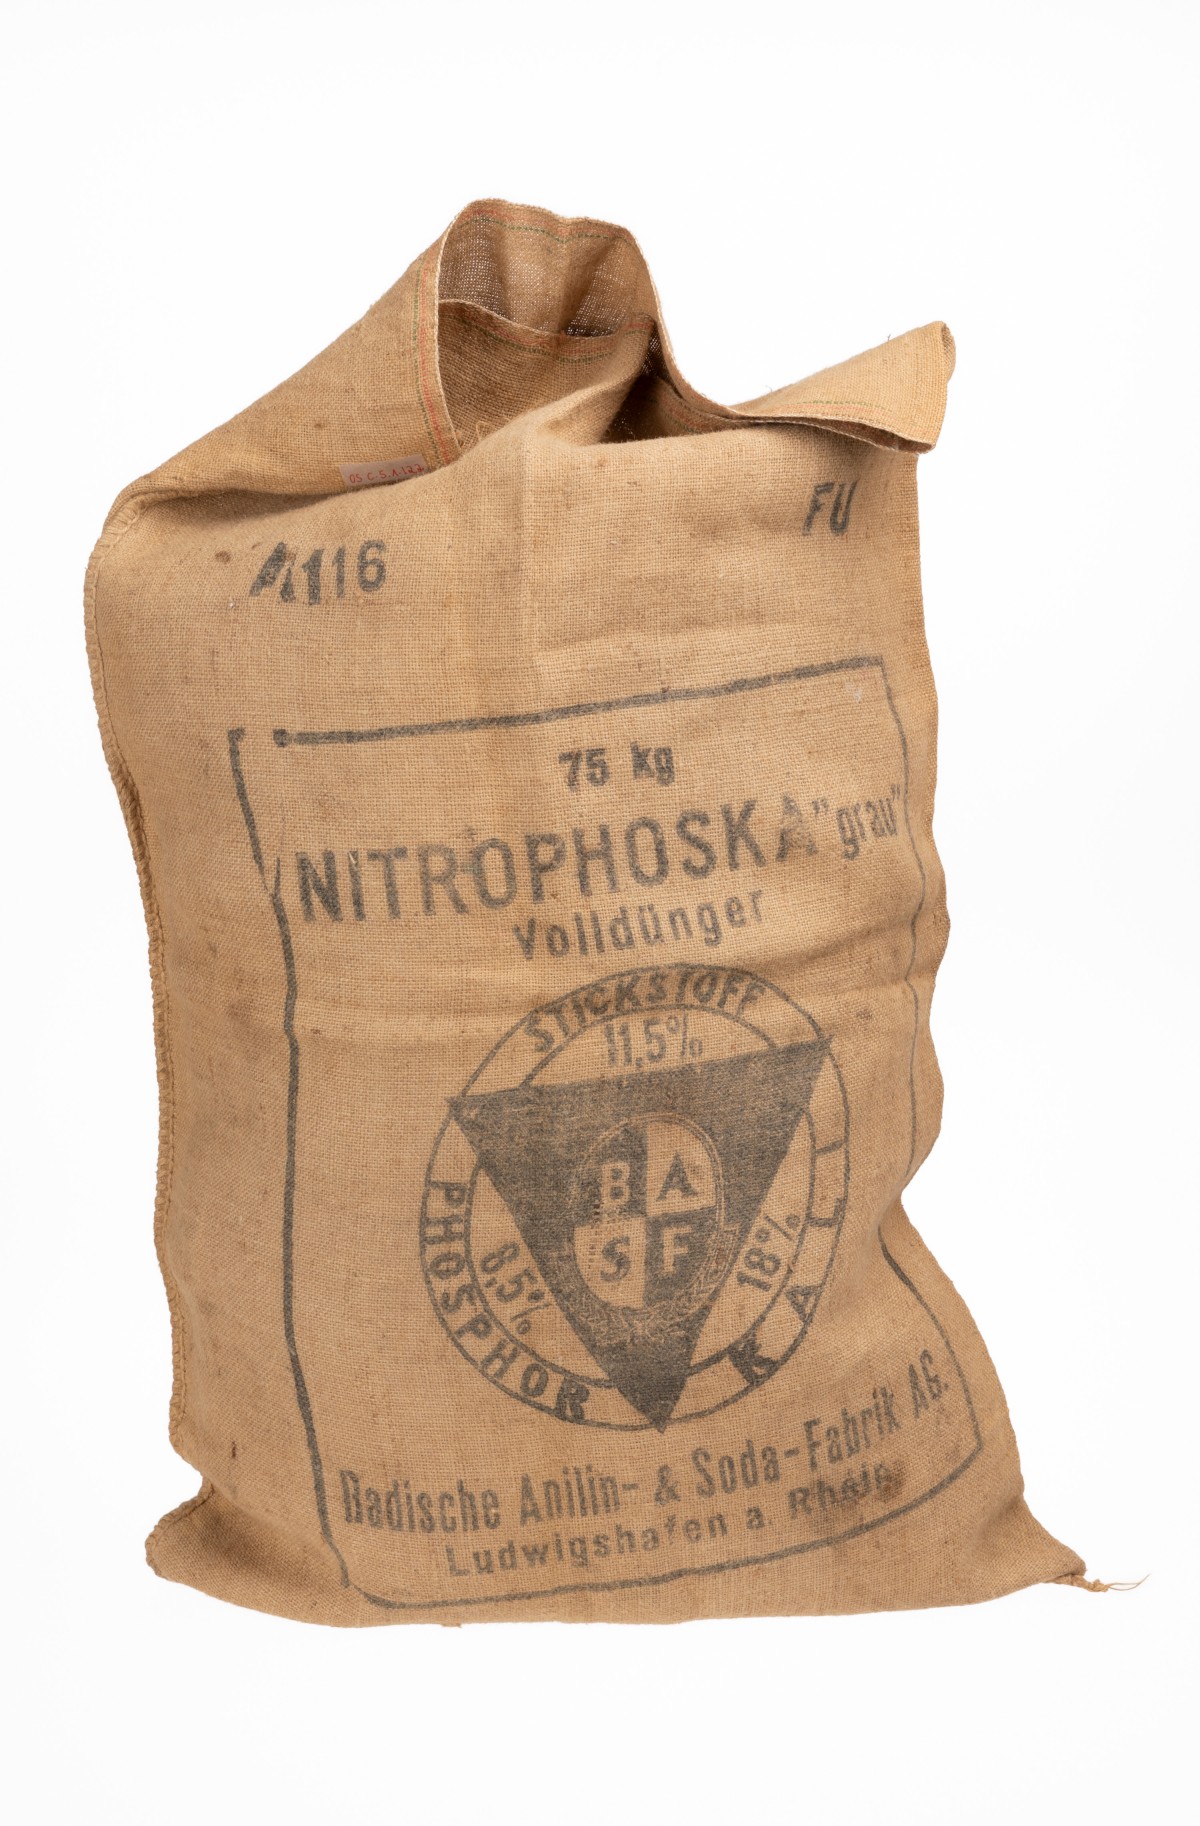 Düngemittelsack für Nitrophoska® (Stickstoffdünger), 1955